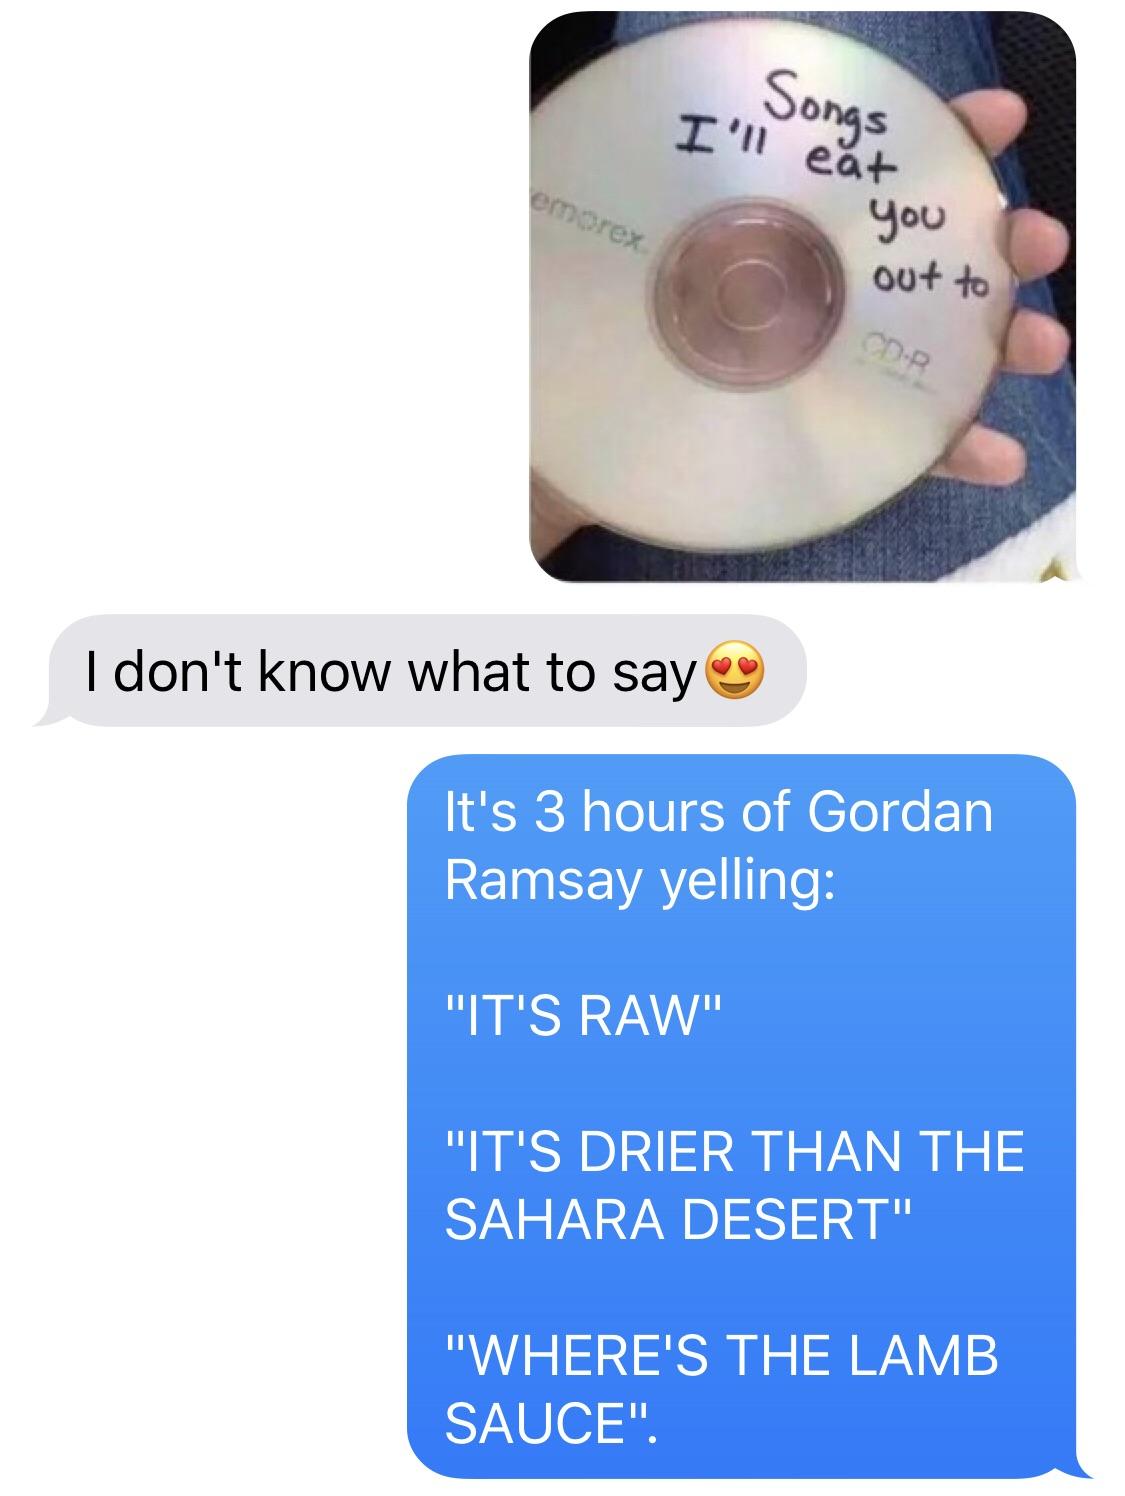 dank cotton eyed joe meme - I'll eat Songs emorex you out to I don't know what to say It's 3 hours of Gordan Ramsay yelling "It'S Raw" "It'S Drier Than The Sahara Desert" "Where'S The Lamb Sauce".